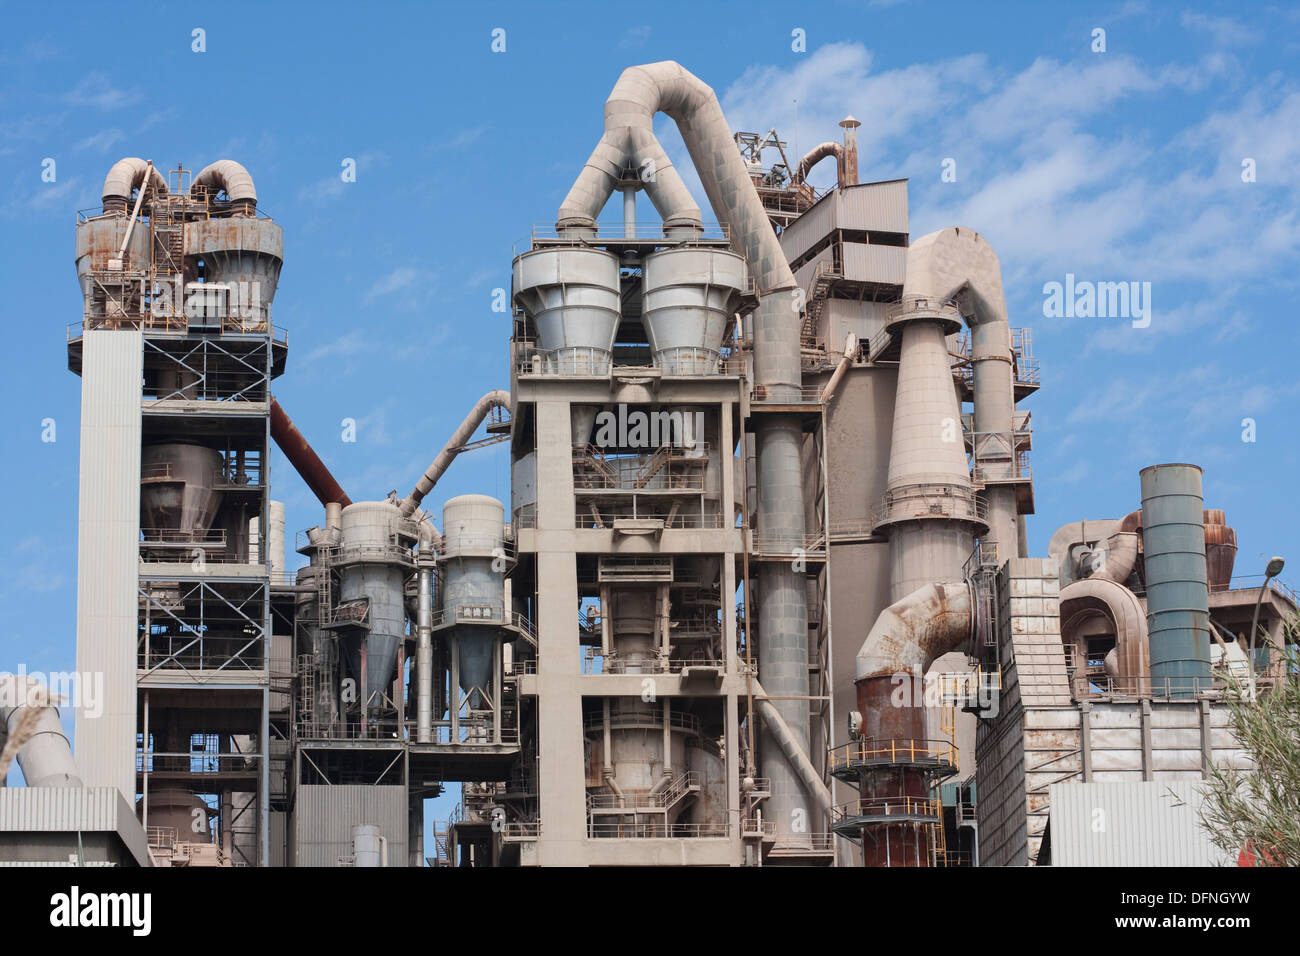 Fabrica de cemento fotografías e imágenes de alta resolución - Alamy